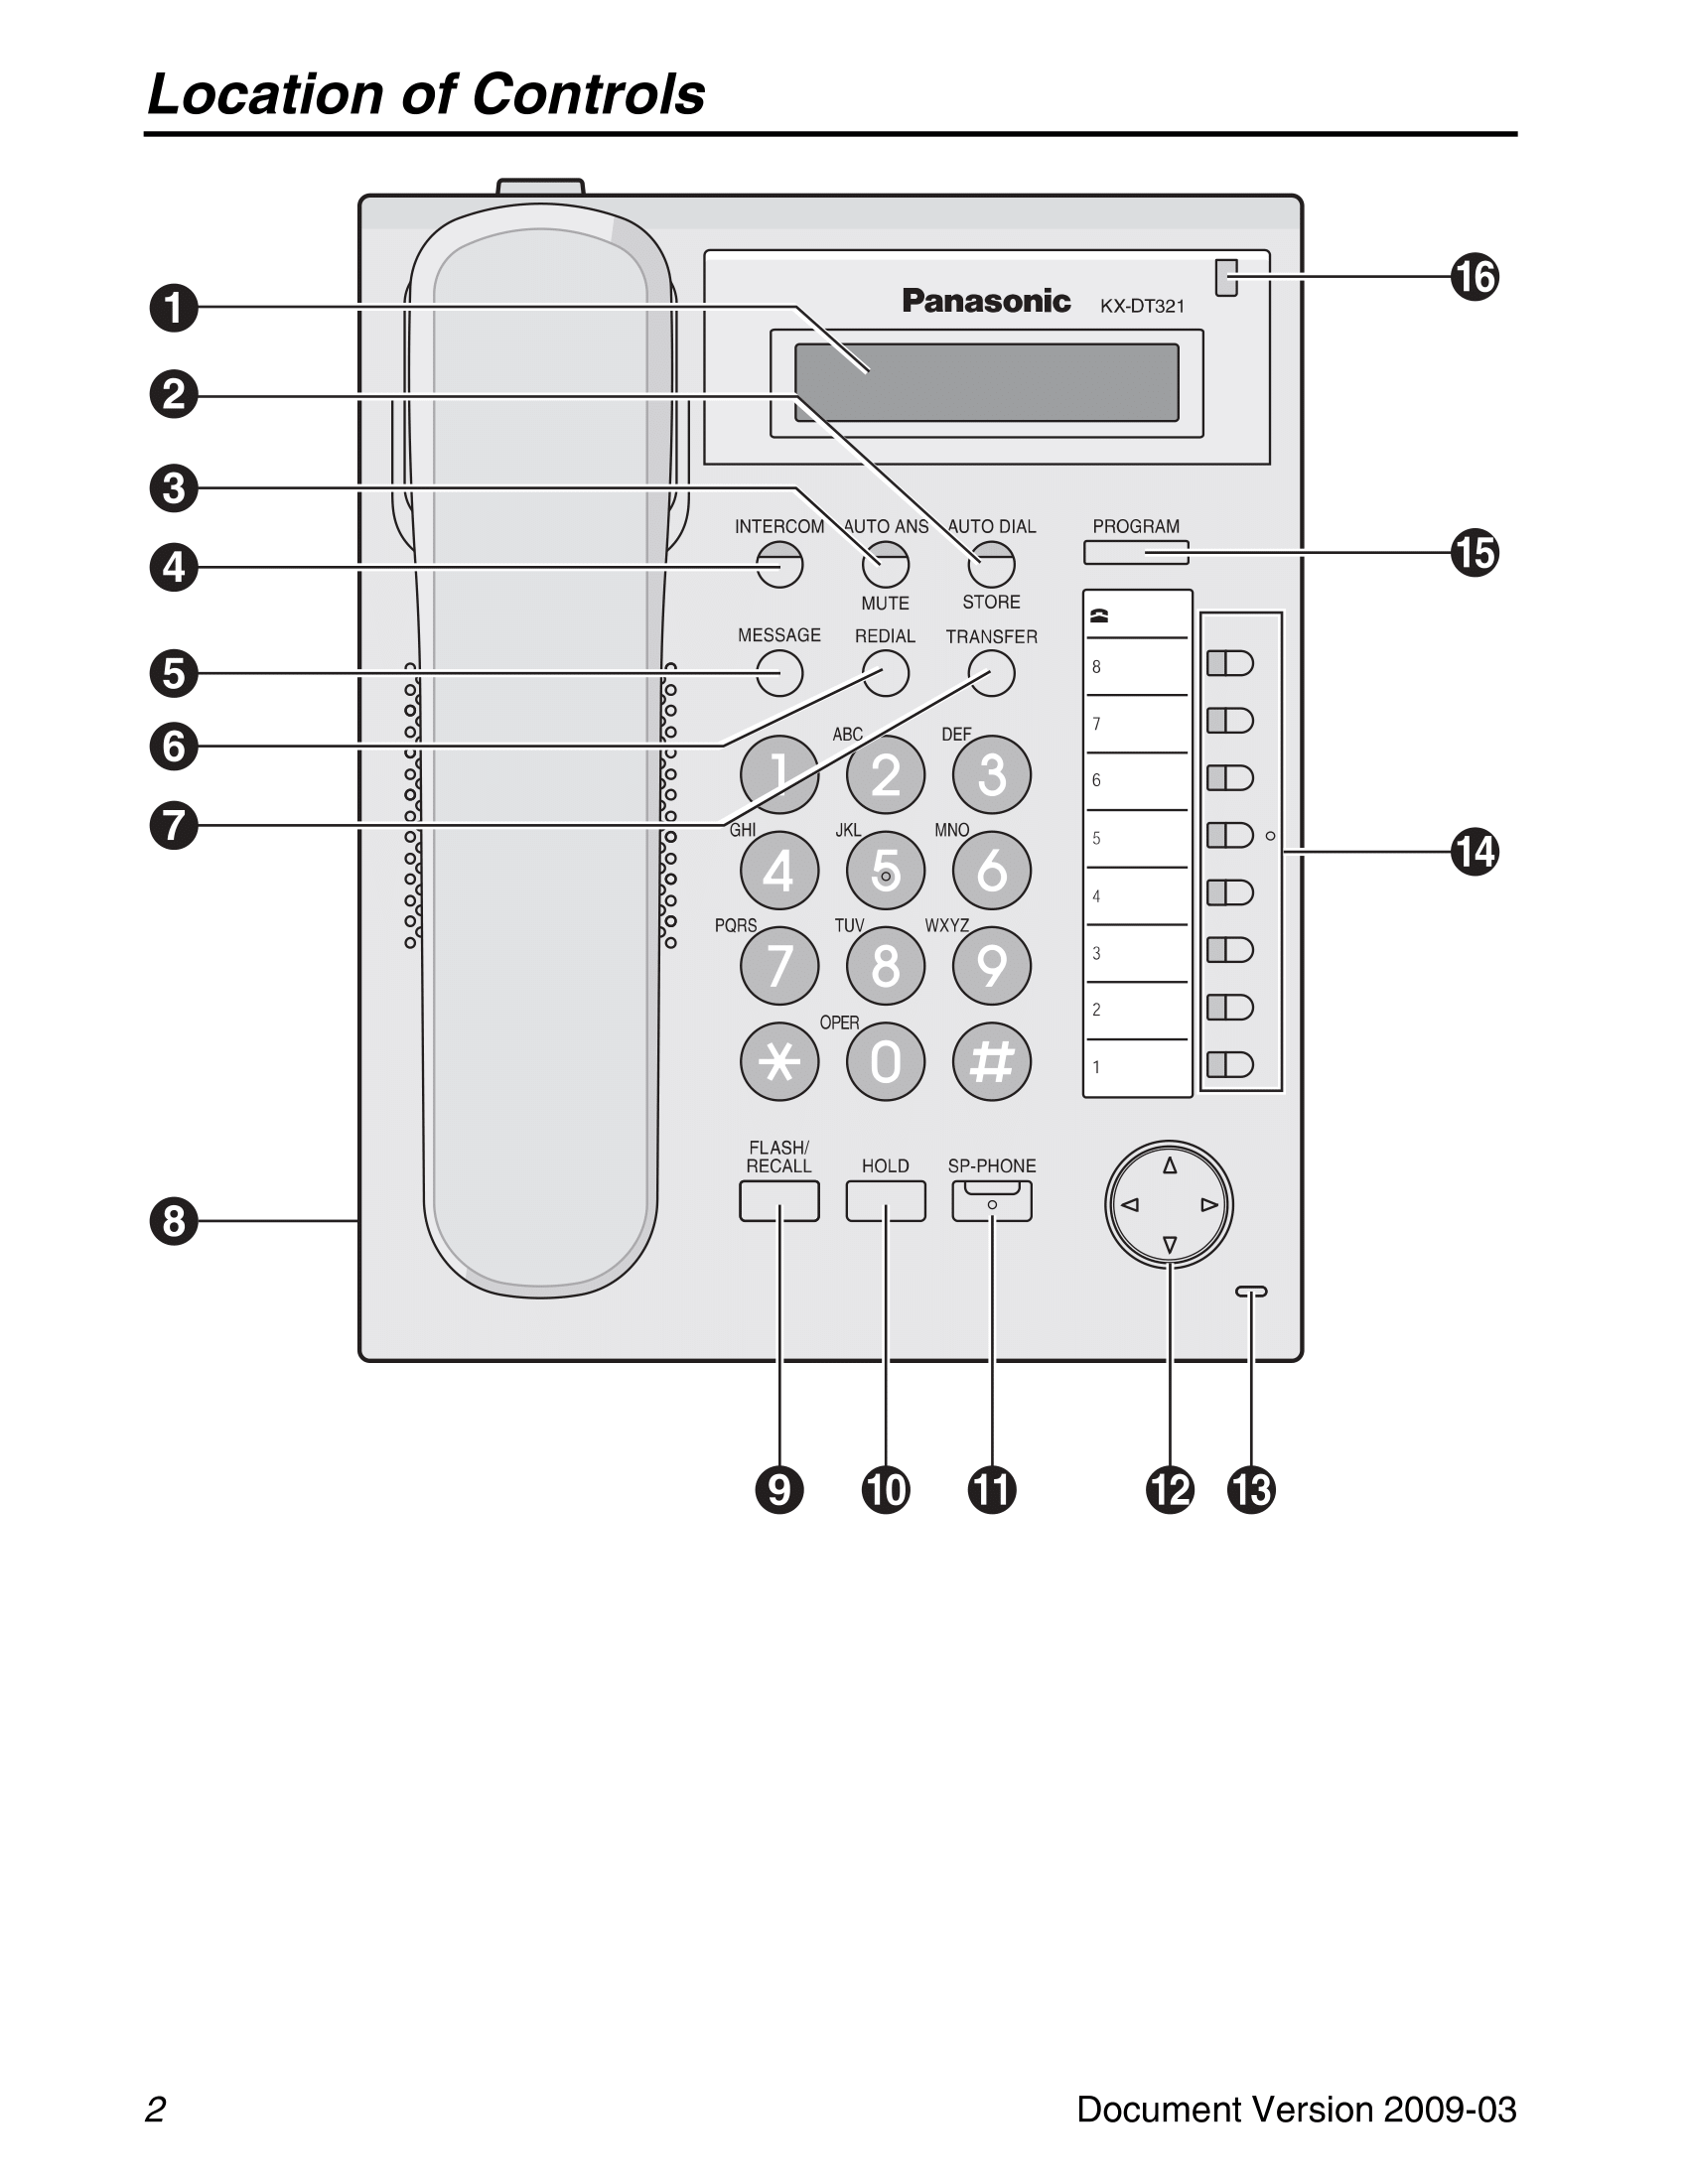 Panasonic KX-DT321 diagram display